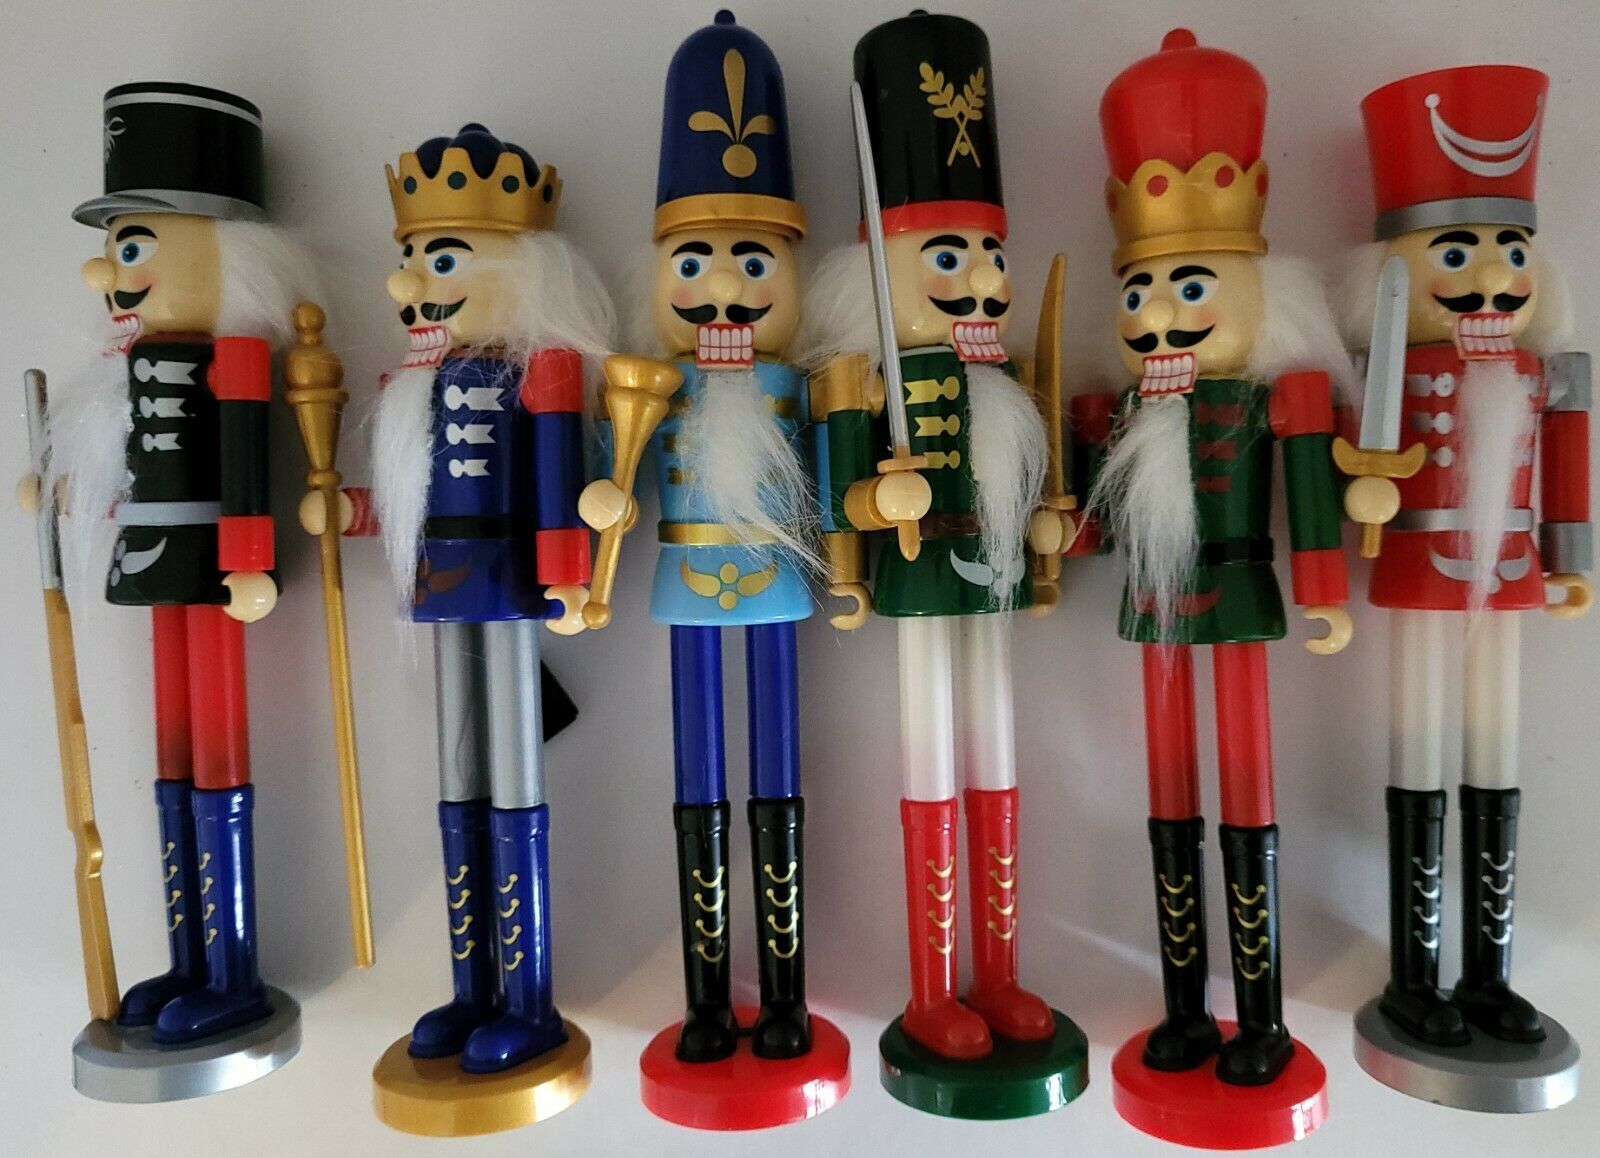 Christmas Nutcracker Soldiers Decorations 9” Polypropylene, Select Colors Brand: - $3.99